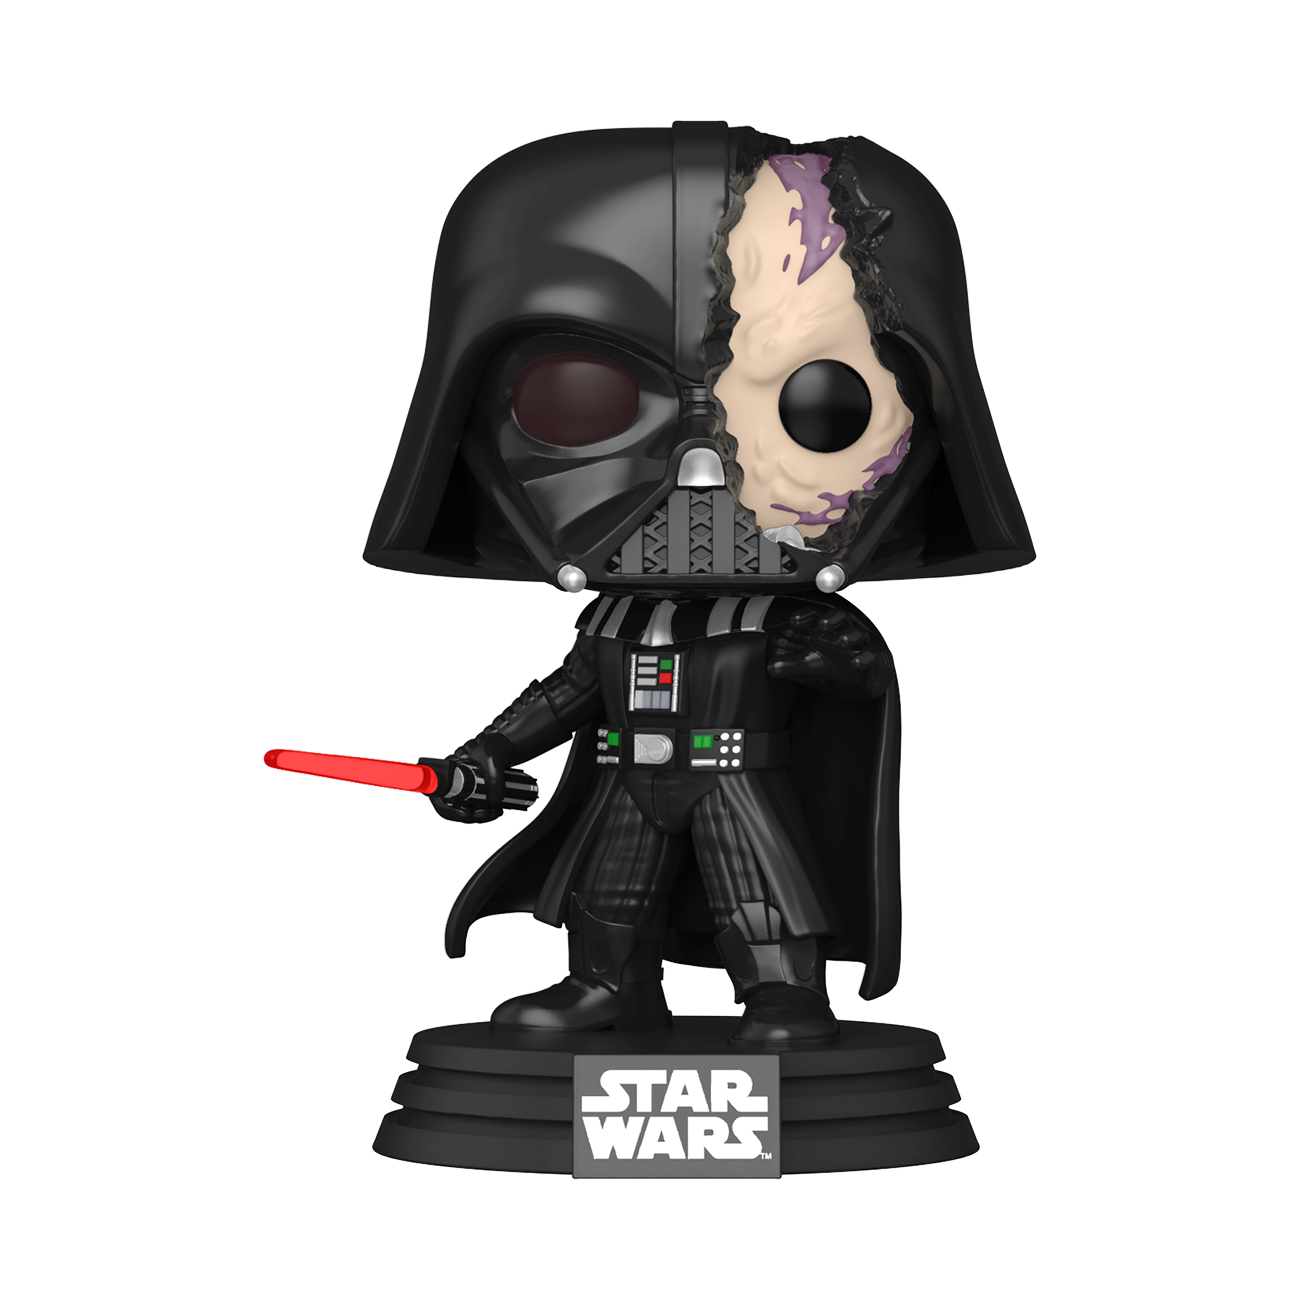 Star Wars - Darth Vader Gift Set